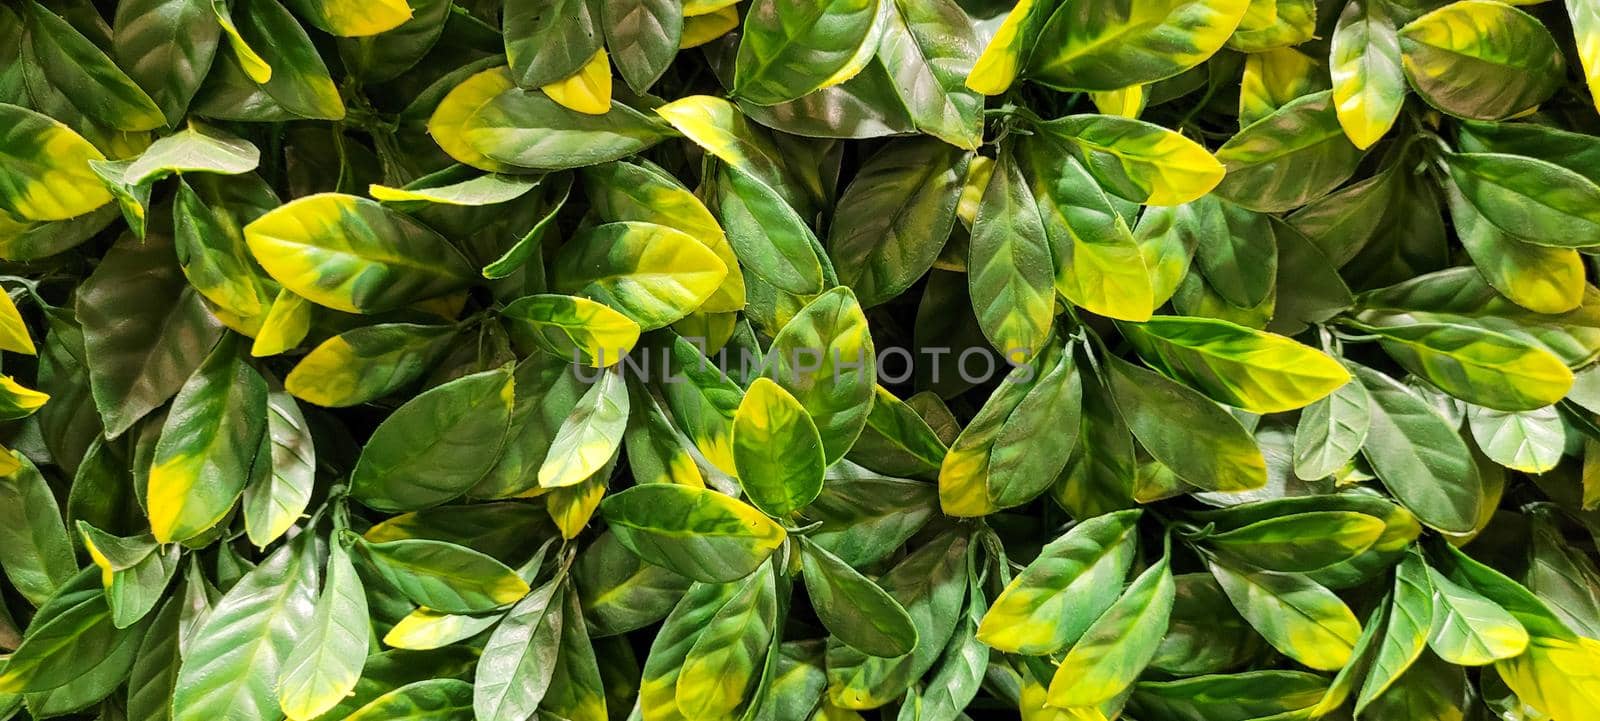 green foliage and native vegetation of brazil